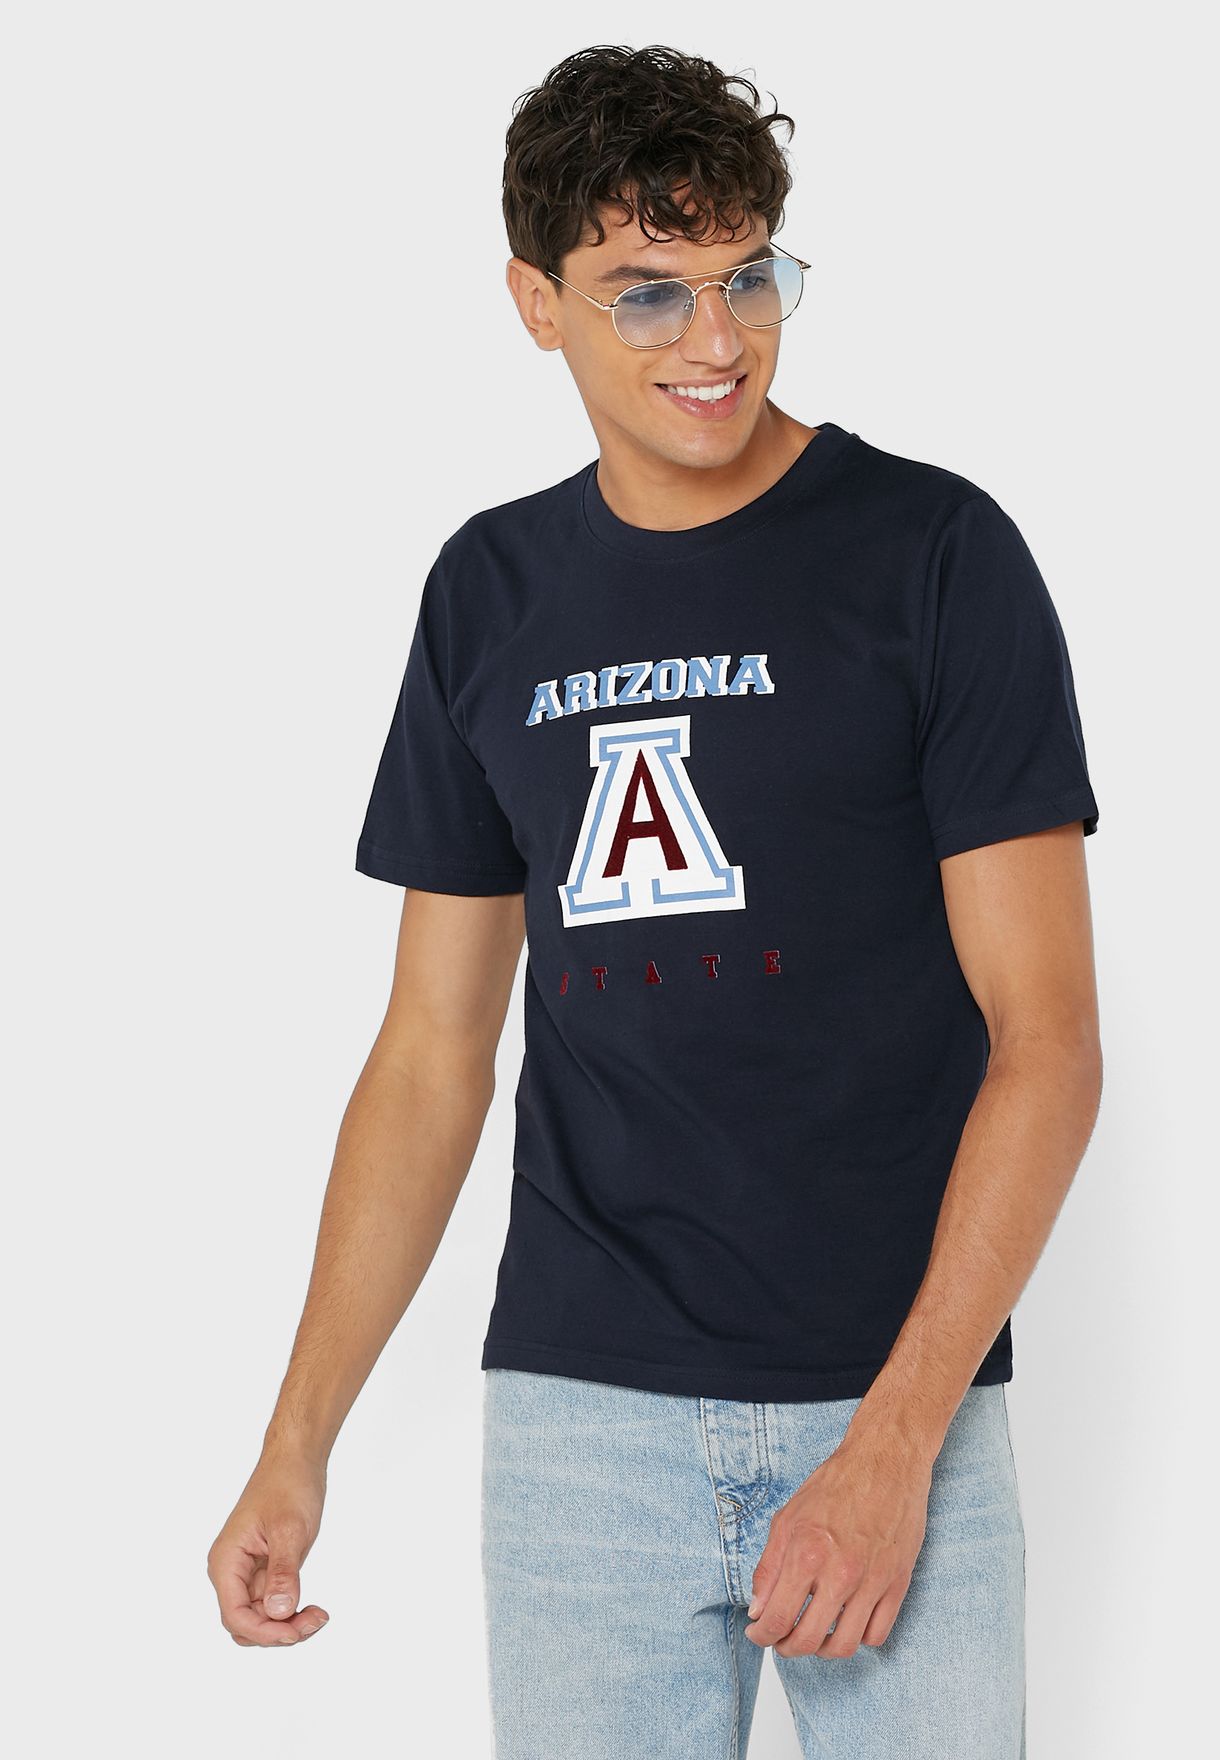 Arizona Print T Shirt